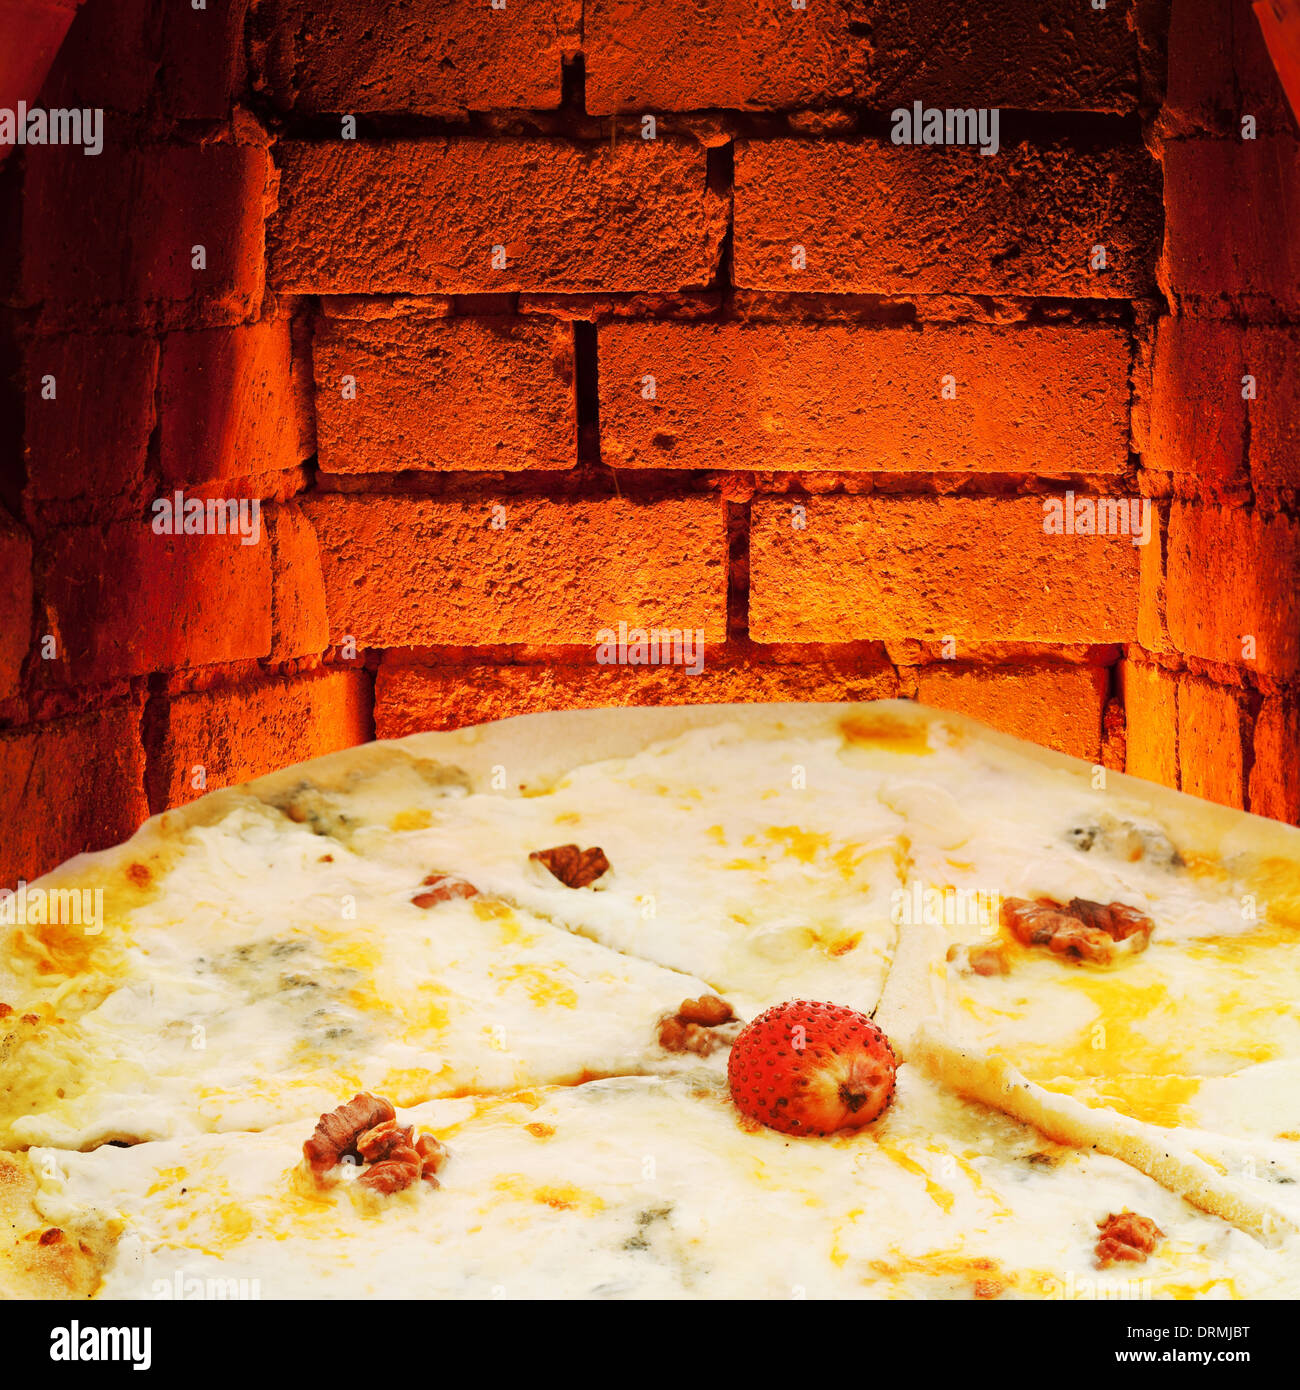 italian pizza quatro formaggi and hot brick wall of wood burning oven Stock Photo